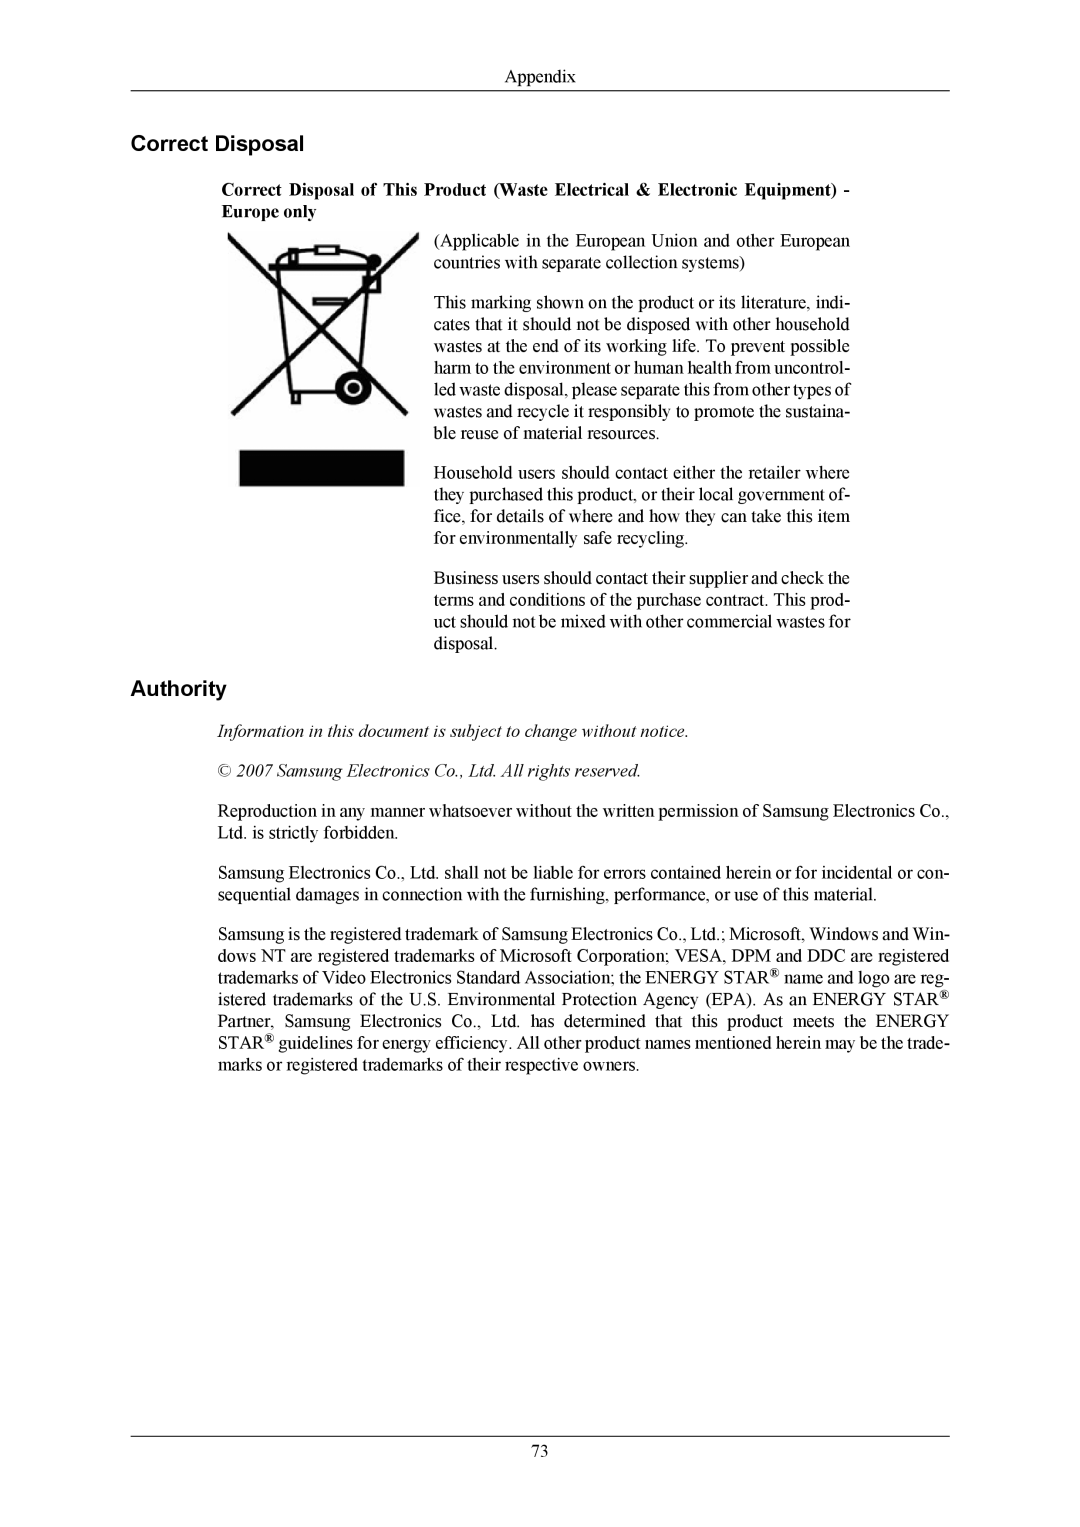 Samsung 2043WM user manual Correct Disposal, Authority 